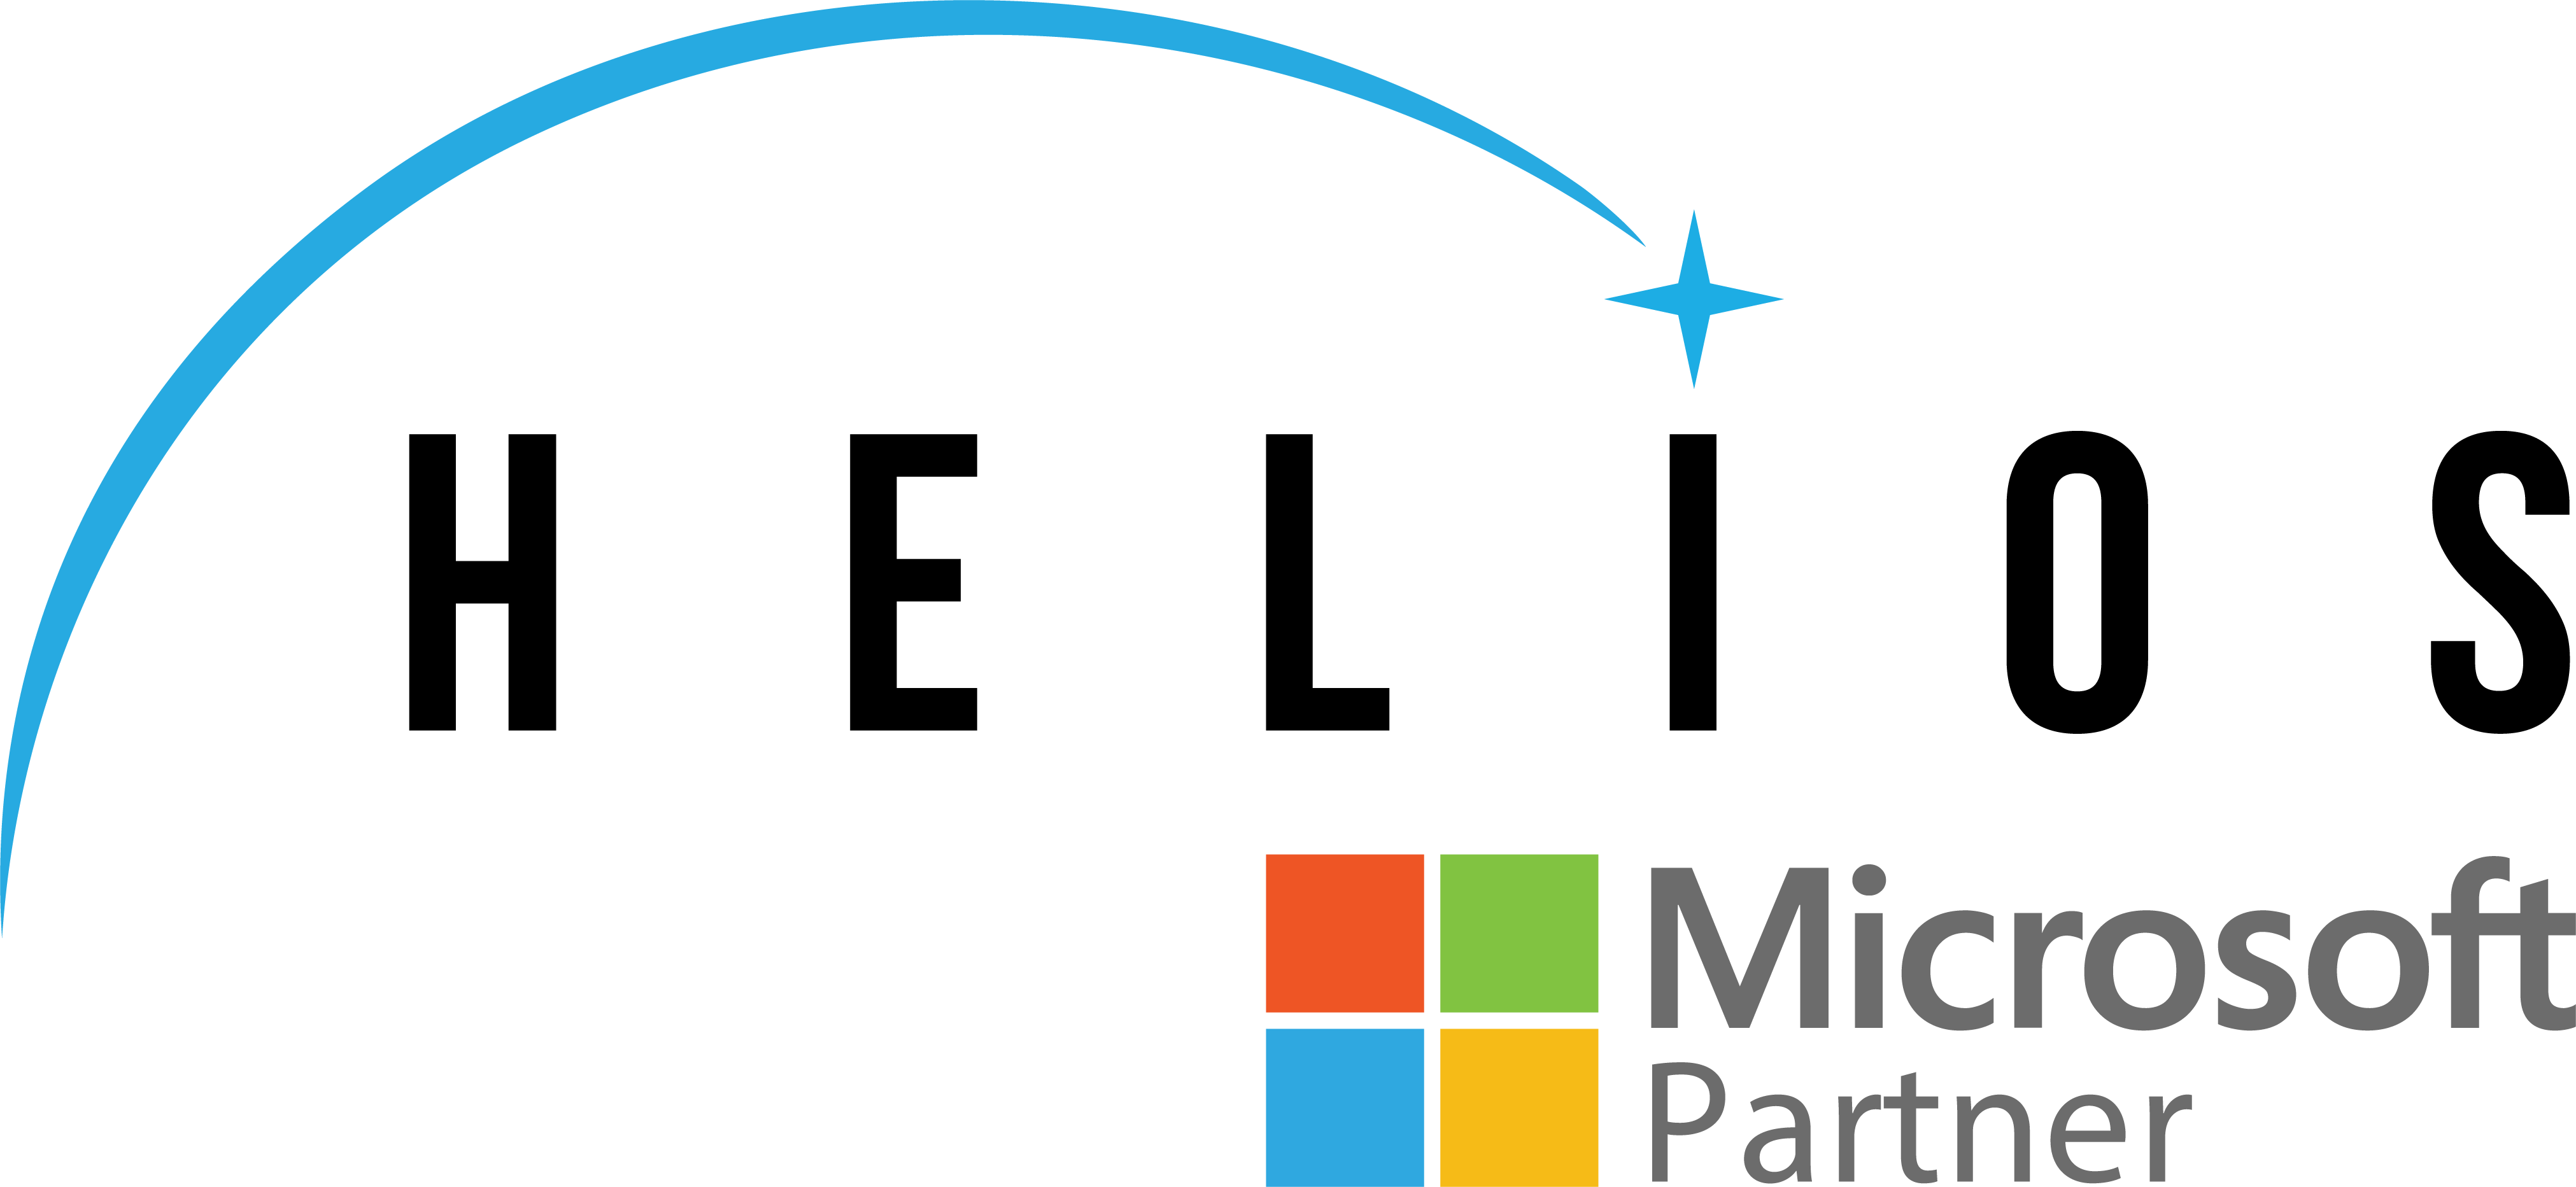 Helios logo - Microsoft Partner